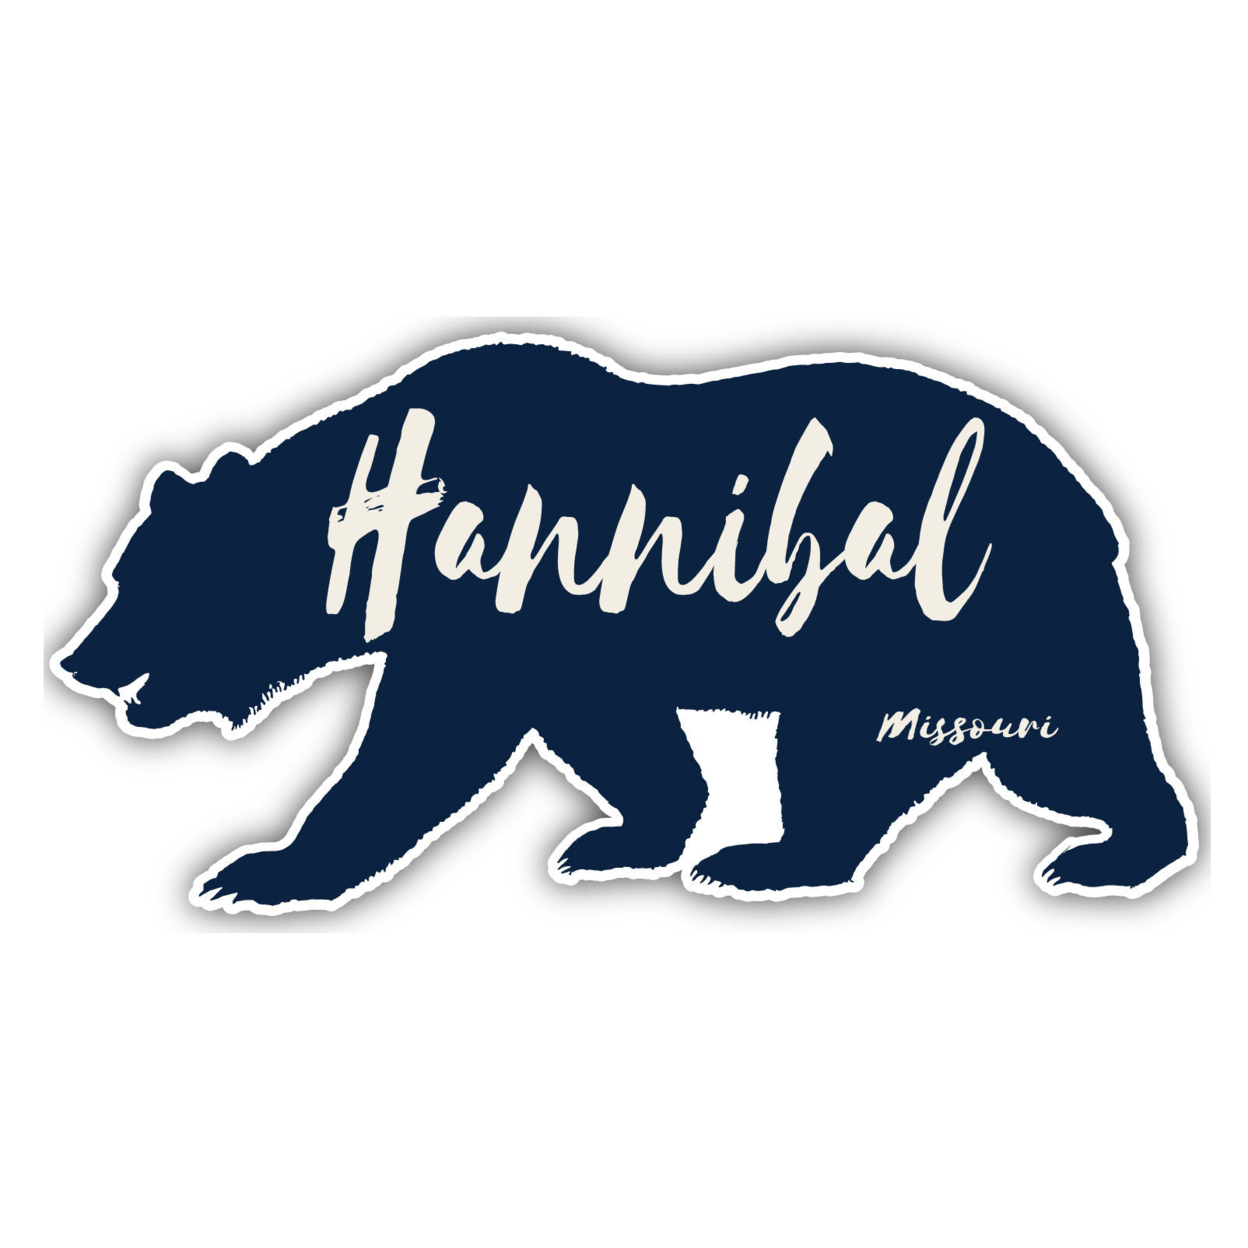 Hannibal Missouri Souvenir Decorative Stickers (Choose Theme And Size) - 4-Pack, 4-Inch, Bear